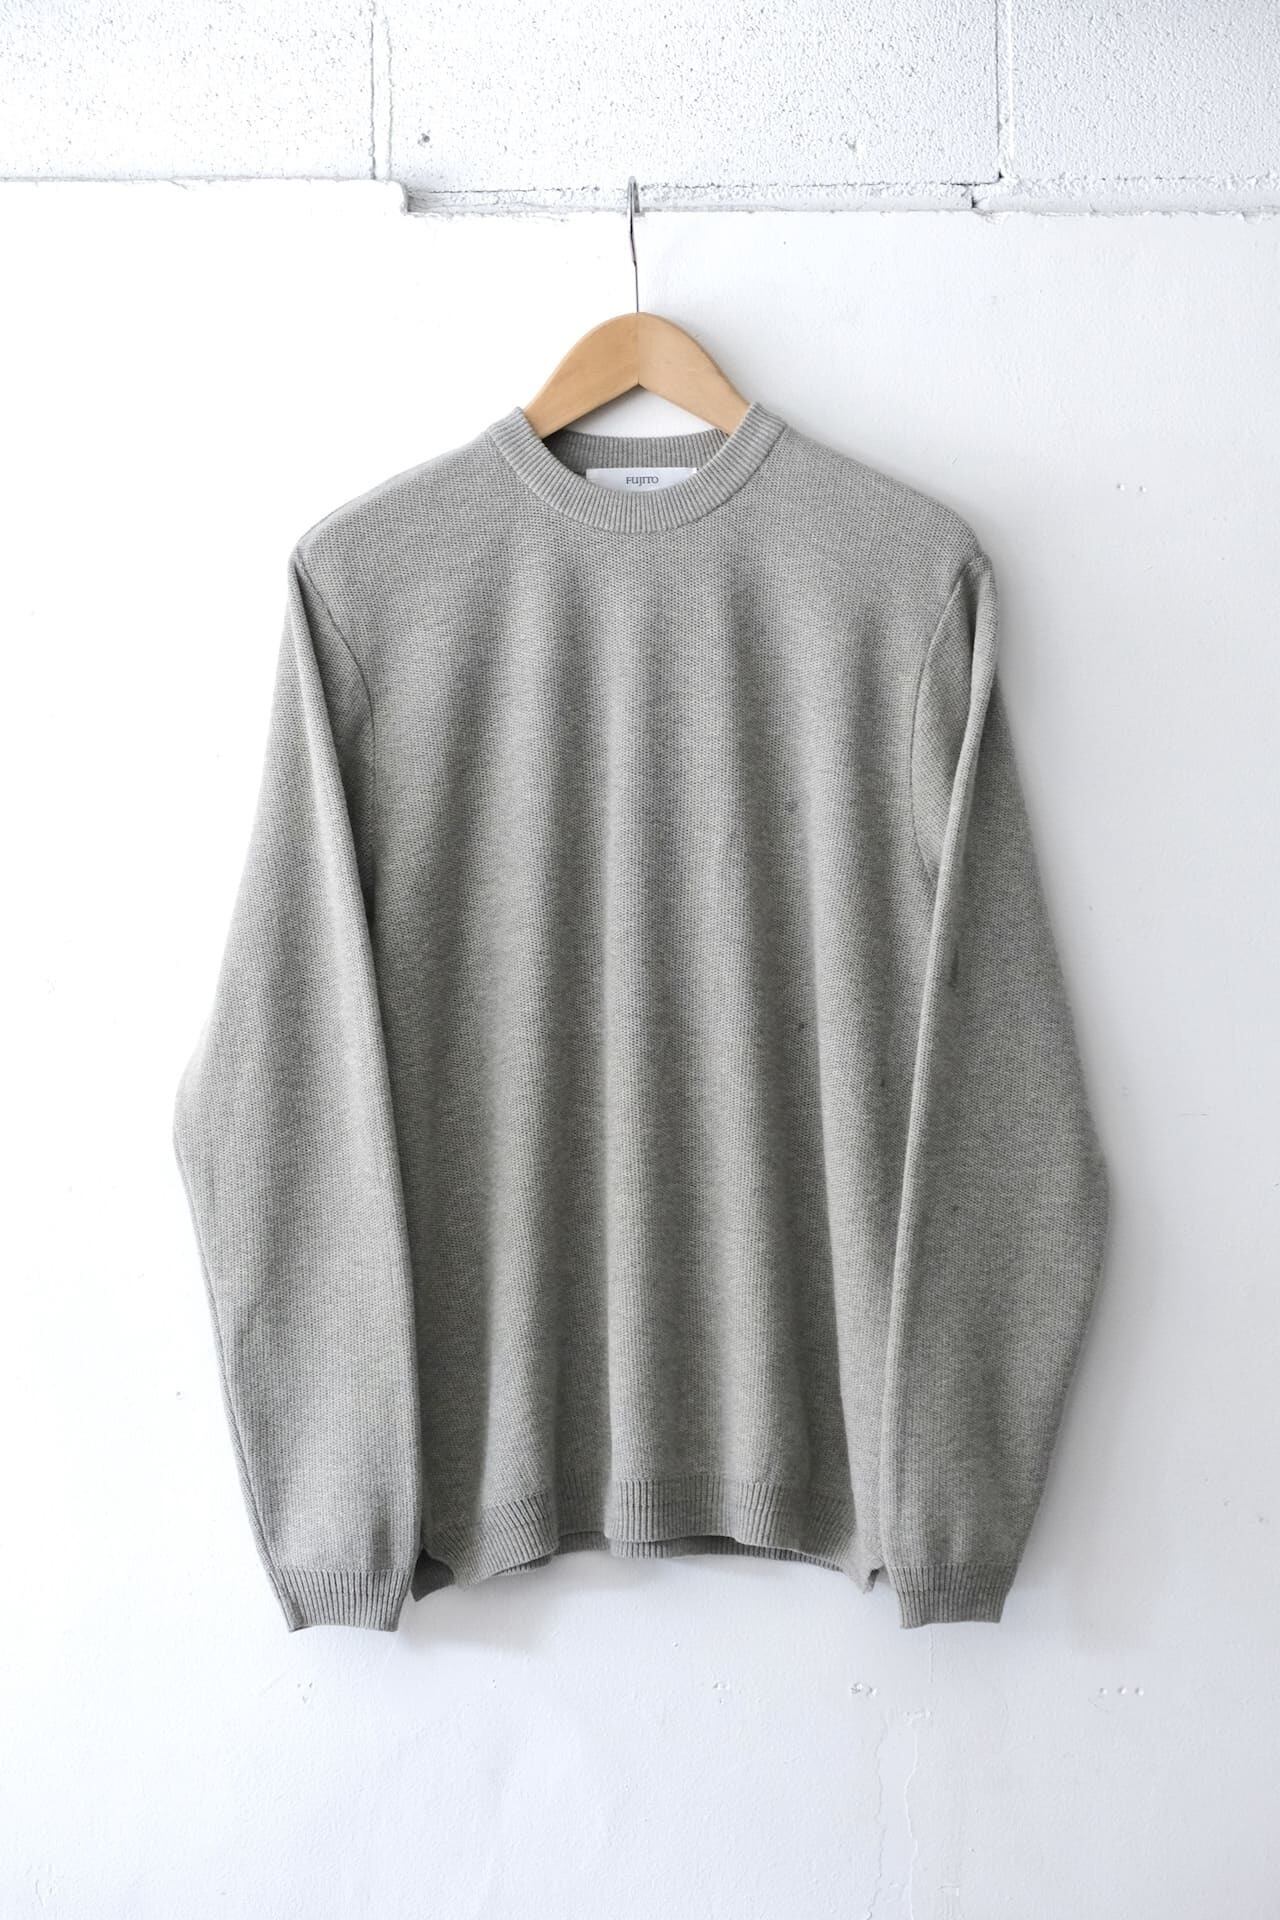 FUJITO L/S Knit T-Shirt　Light Gray,Sax,Navy,Brown